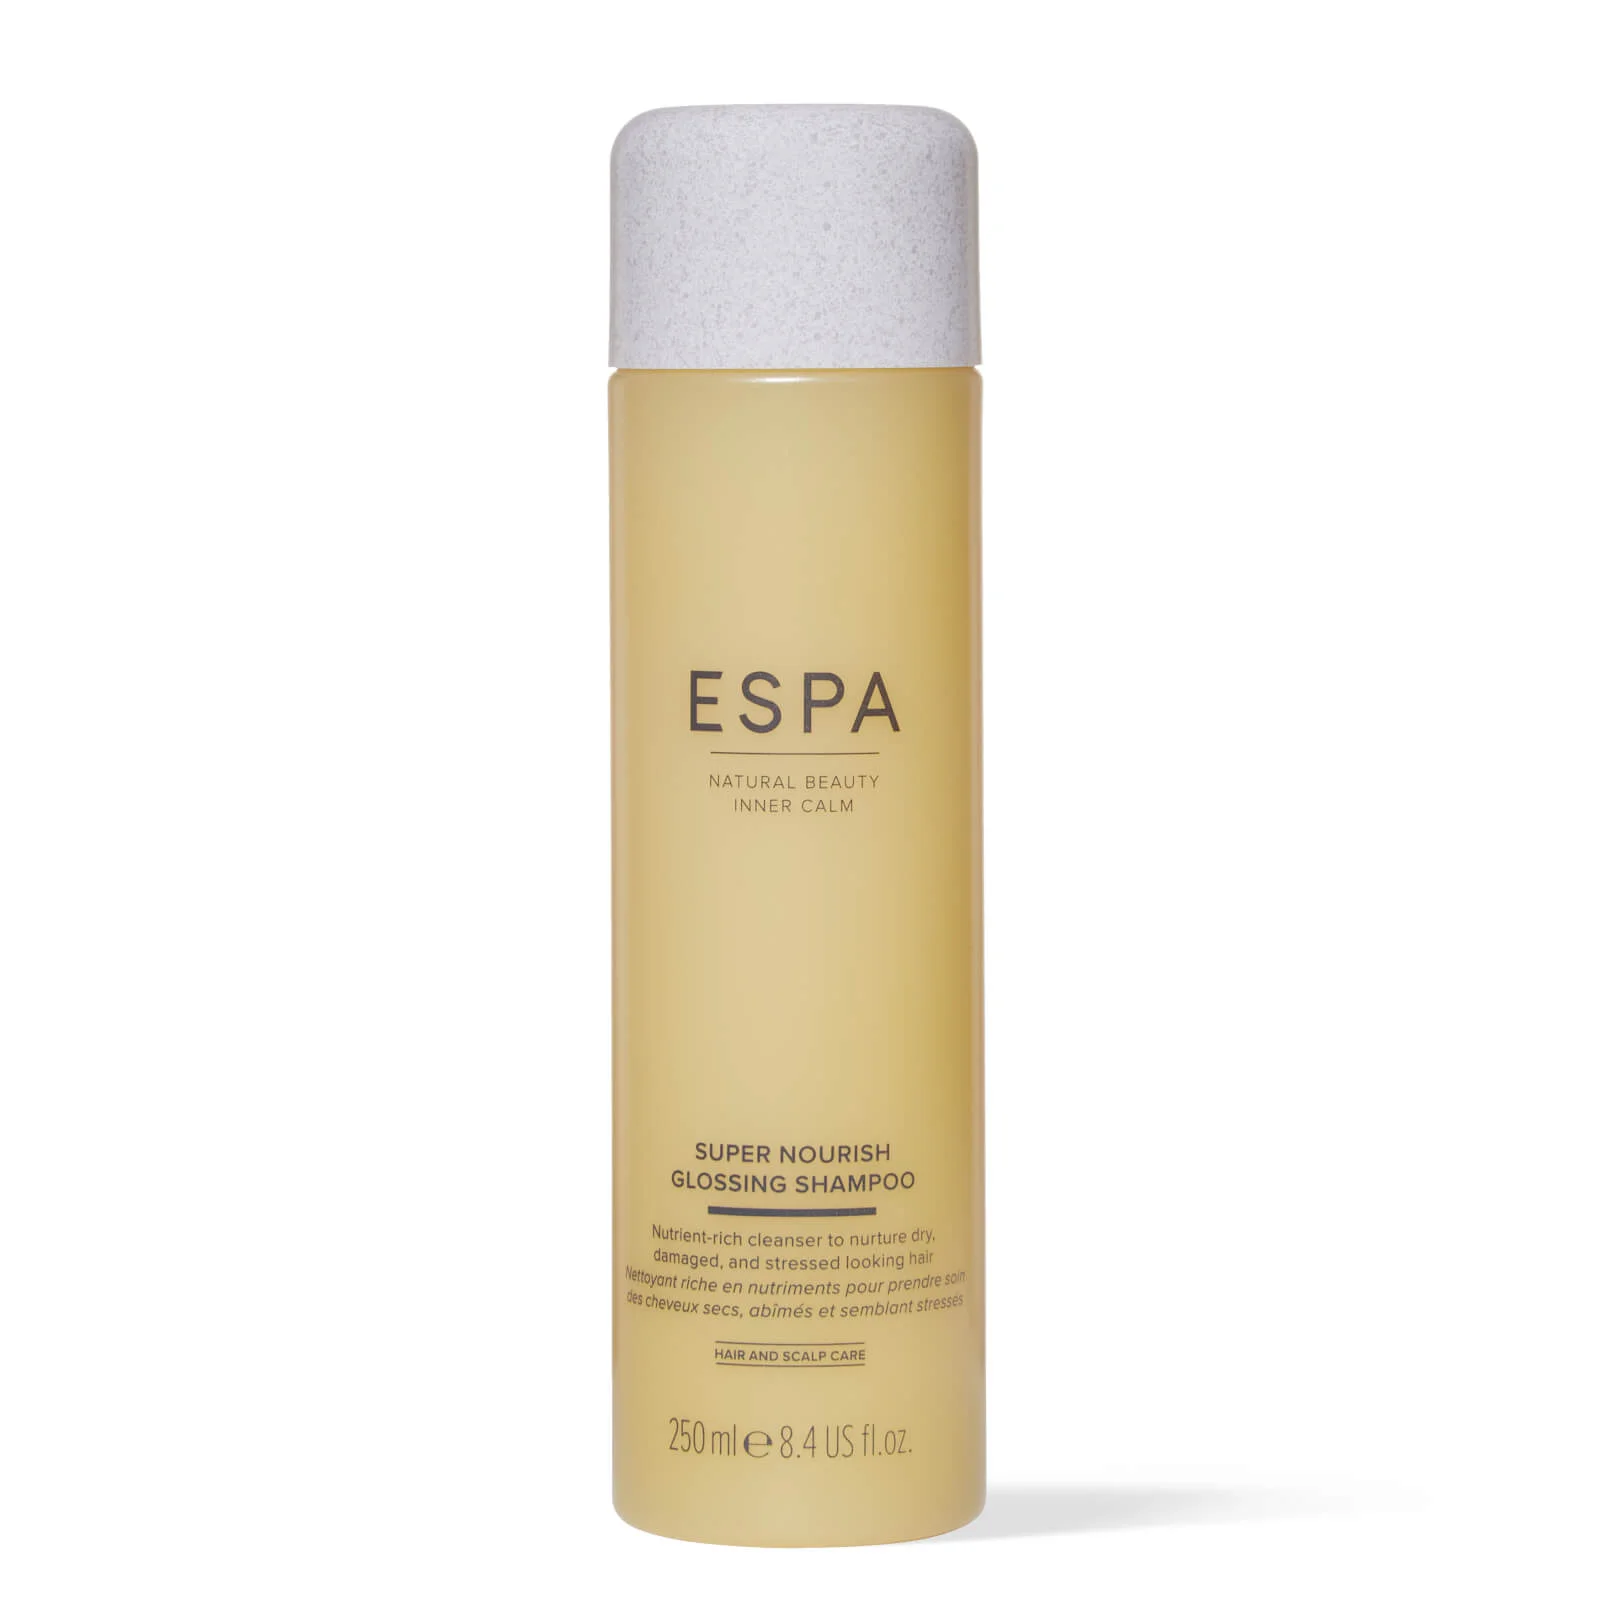 ESPA Super Nourish Glossing Shampoo 250ml Image 1